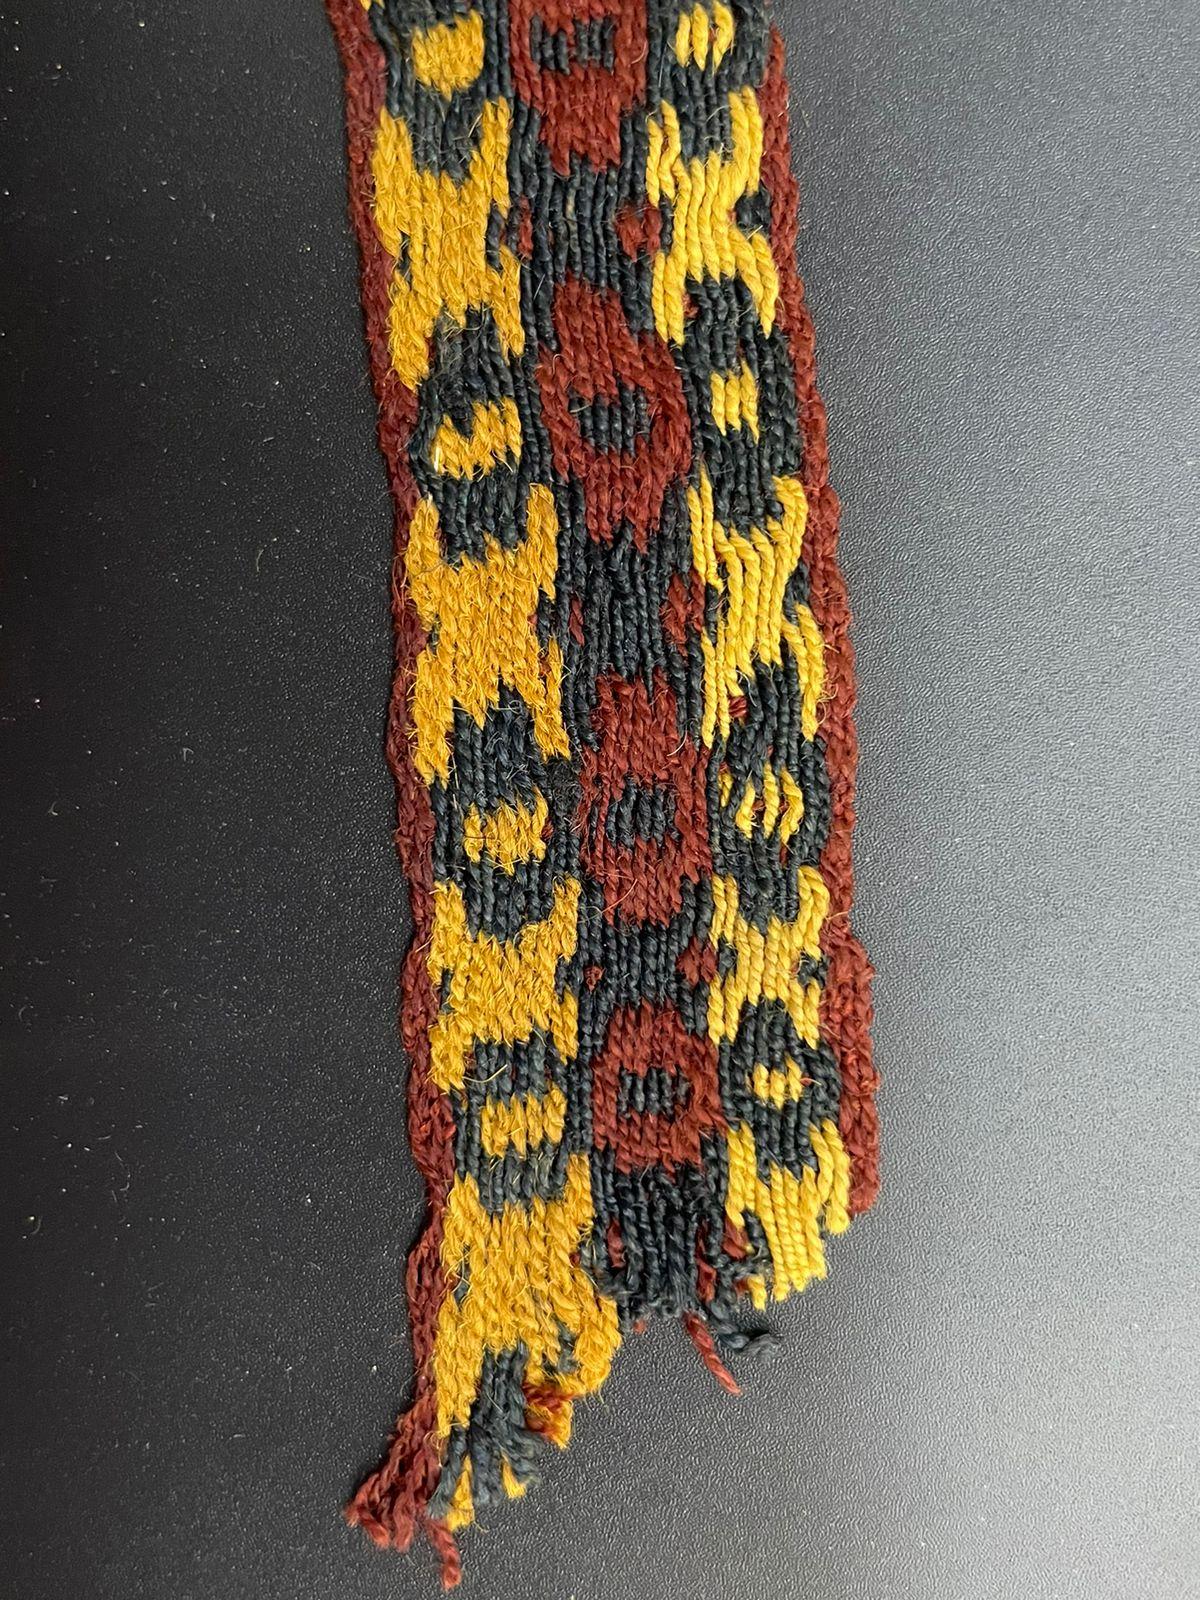 Hand-Woven Chancay Pre-Columbian Textile Fragment, Peru ca 1100-1400 AD, Ex Ferdinand Anton For Sale